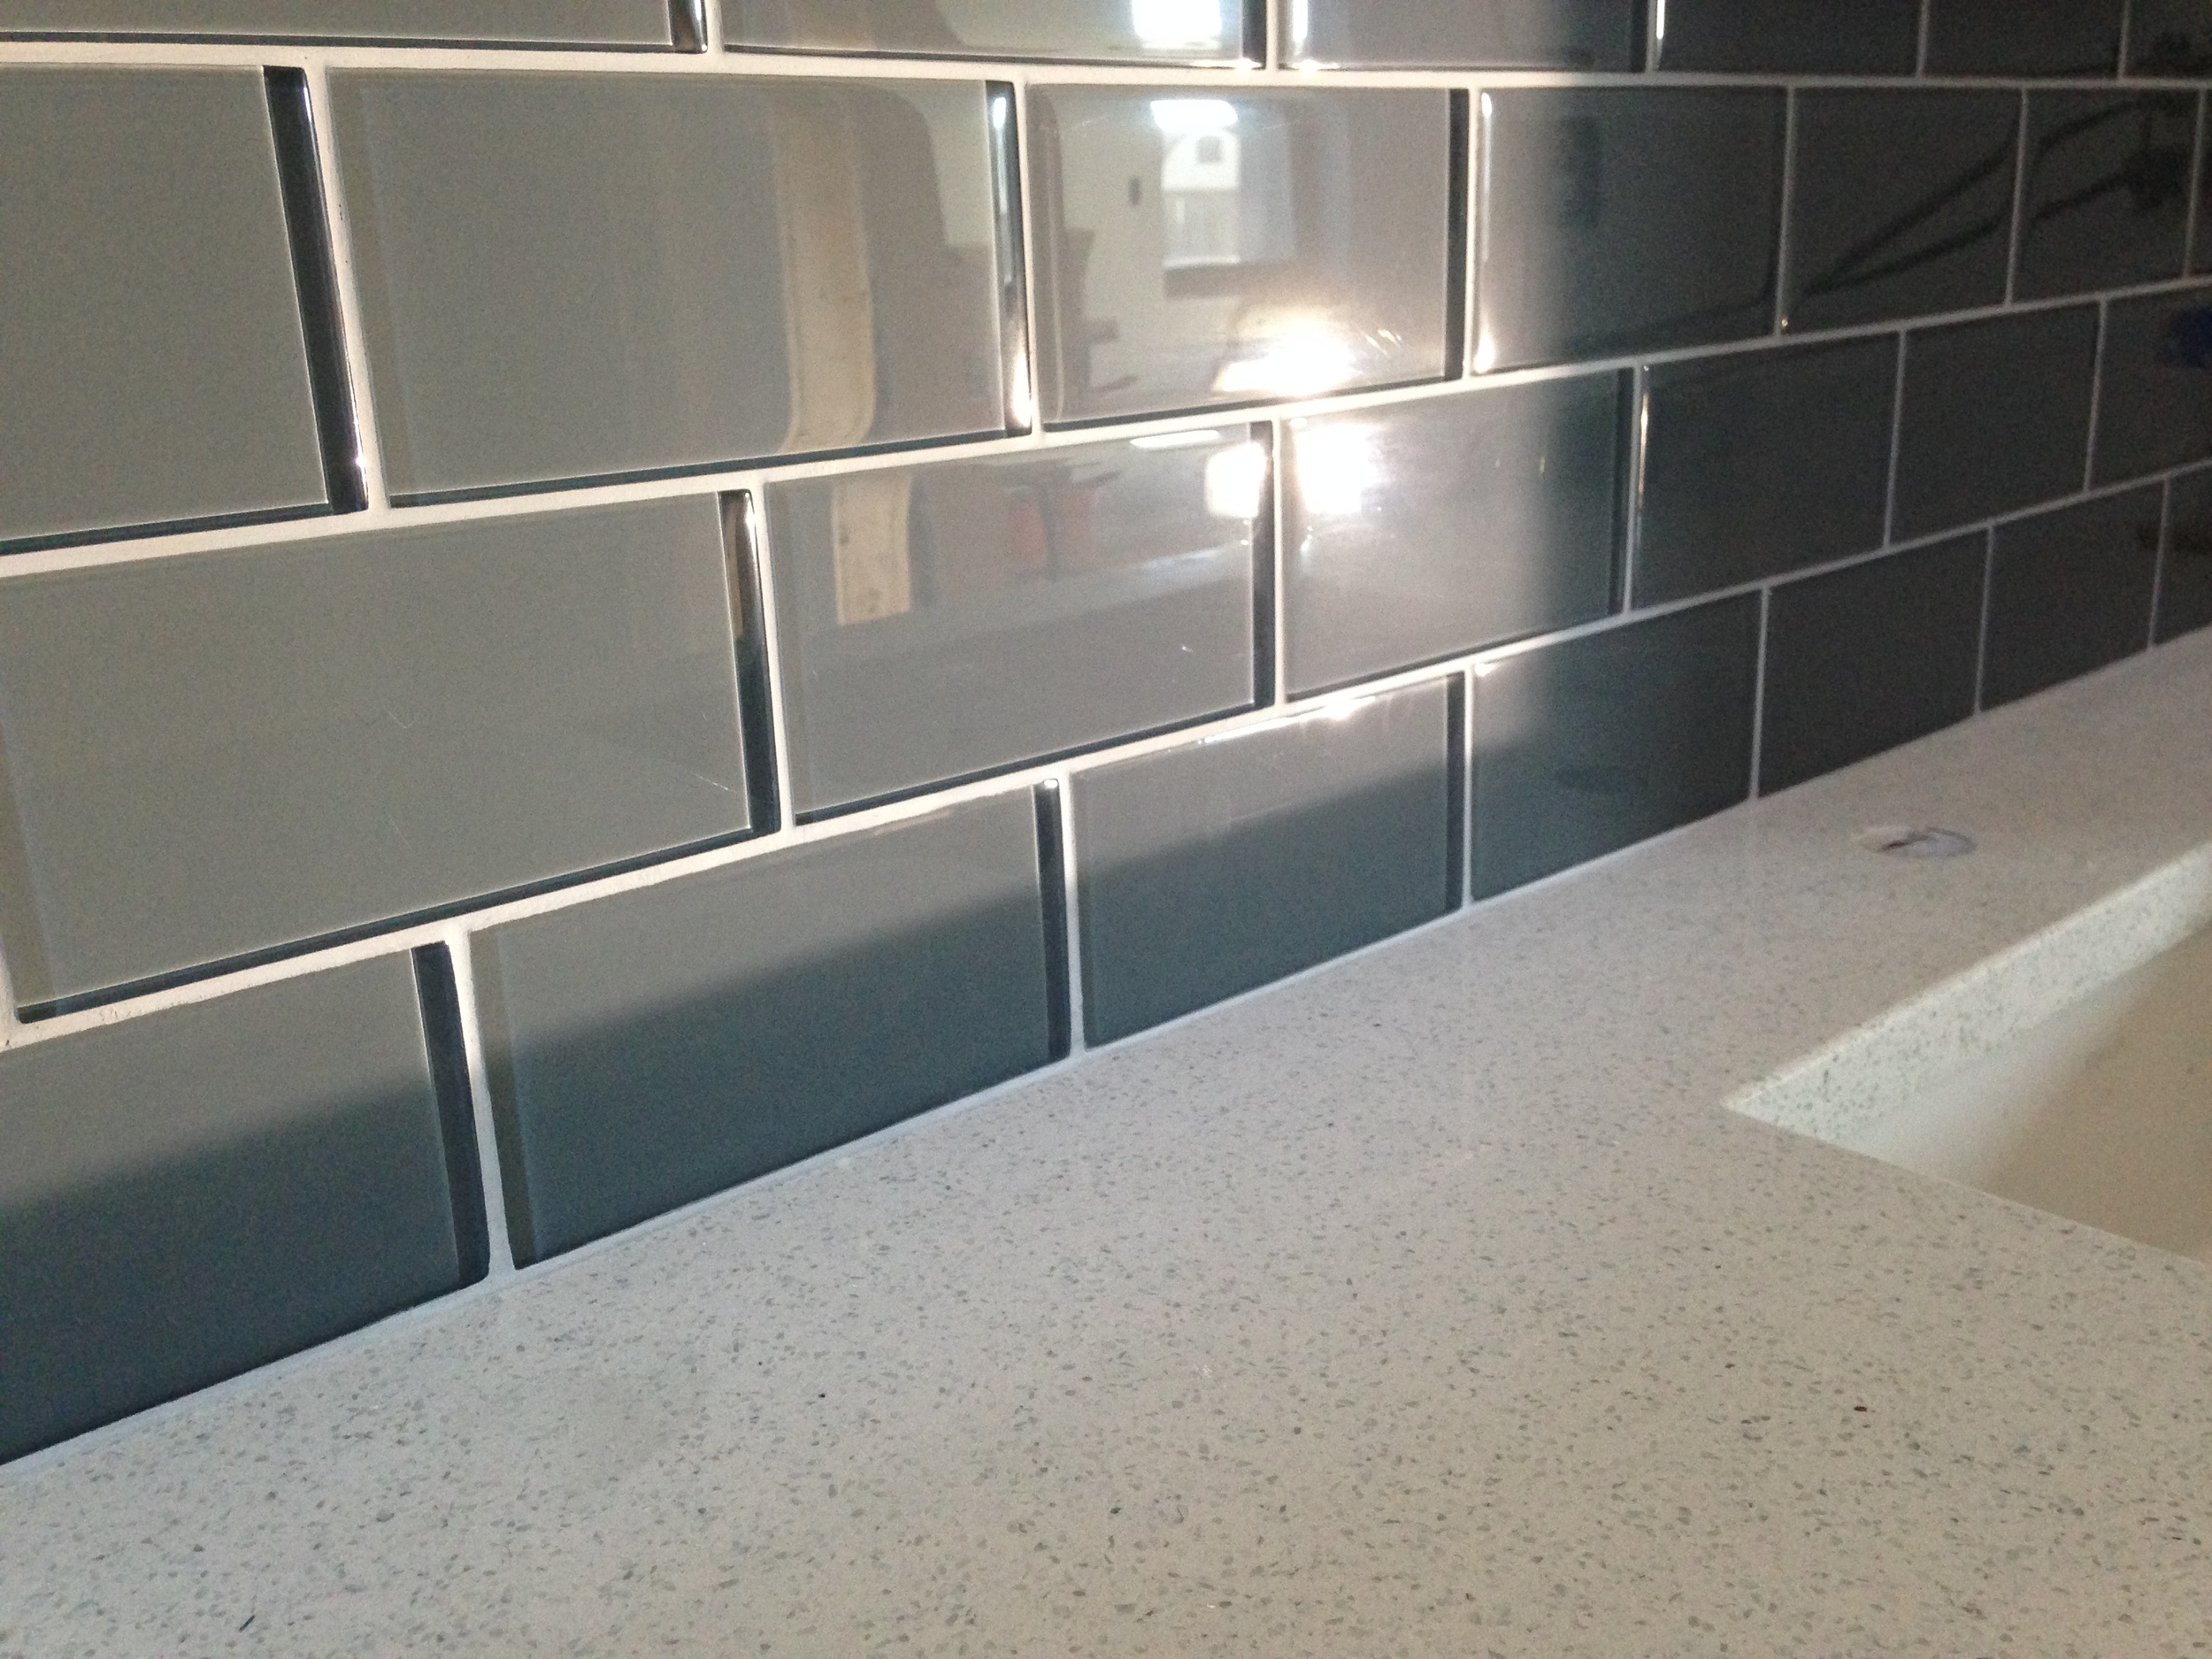  Master bath quartz counter top and glass wall tile 